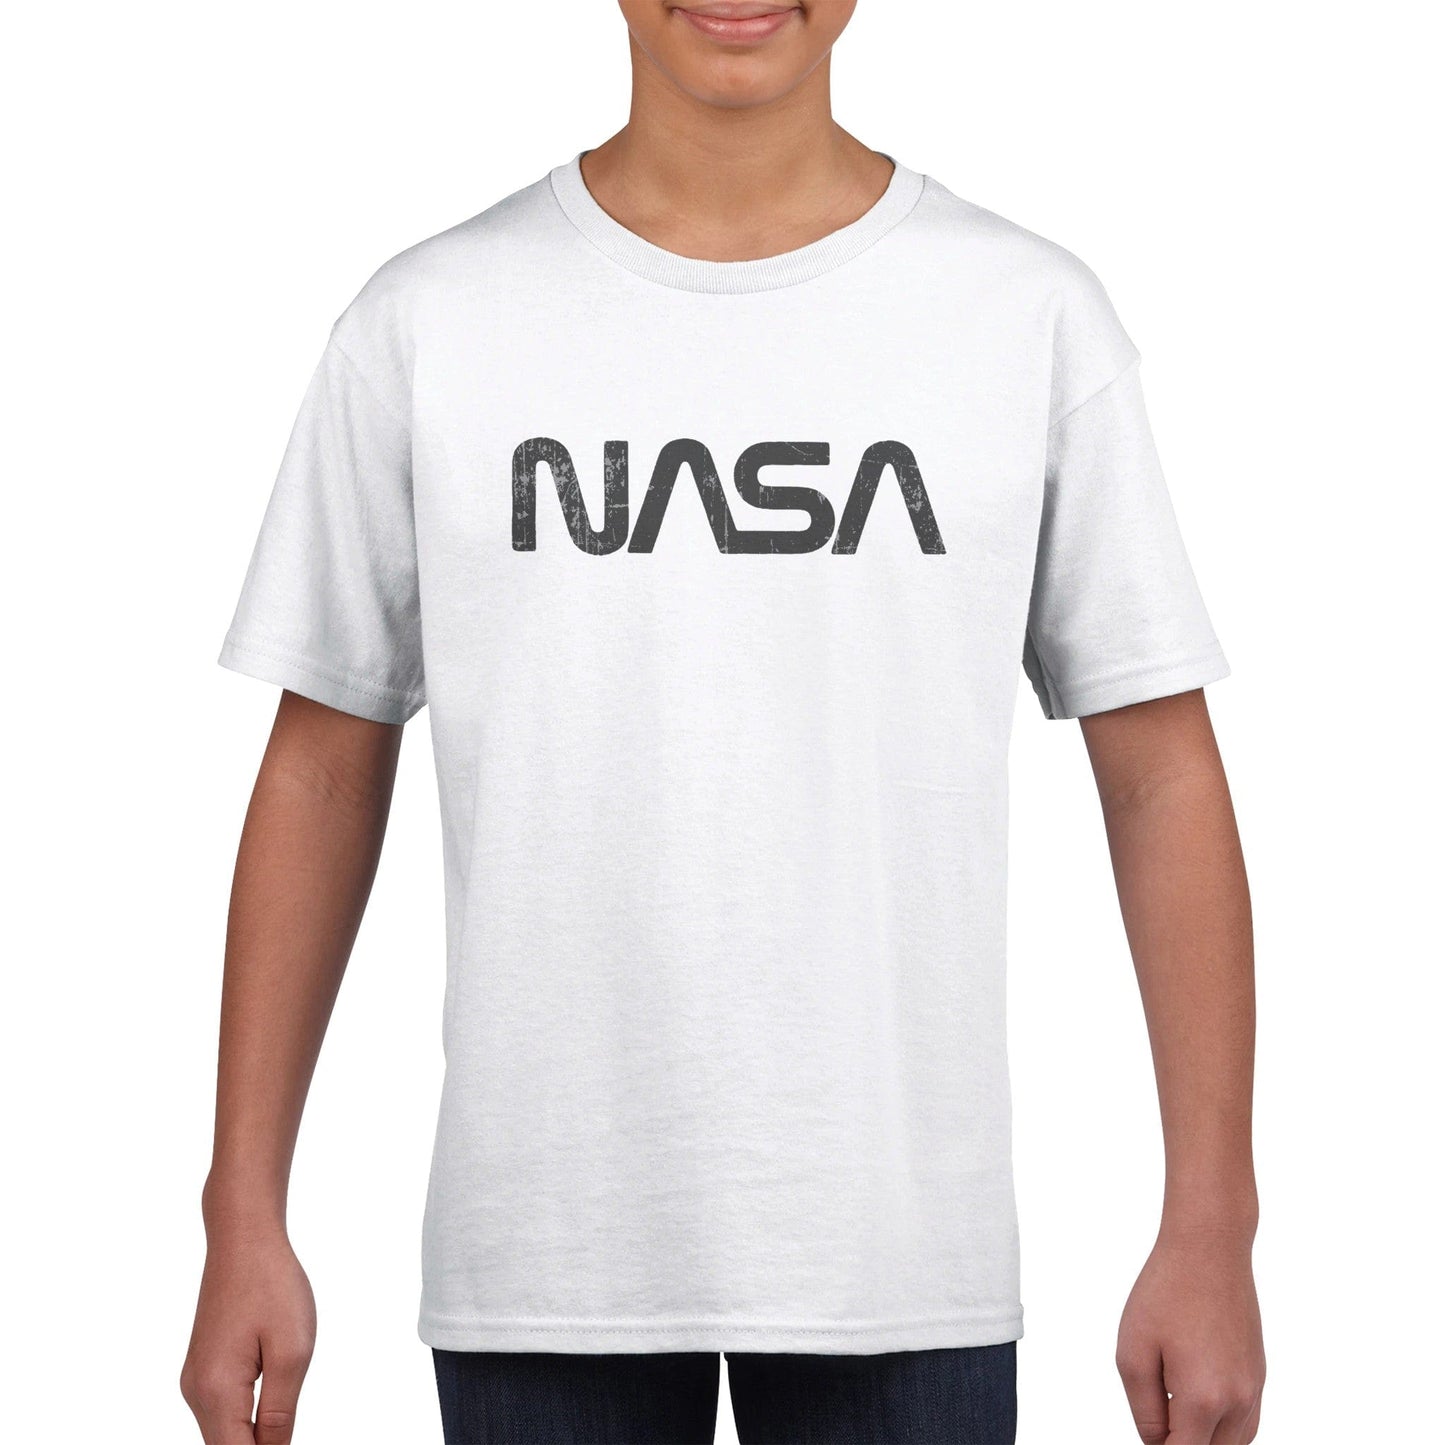 NASA Worm Distressed Kids T-shirt Graphic Tee Australia Online